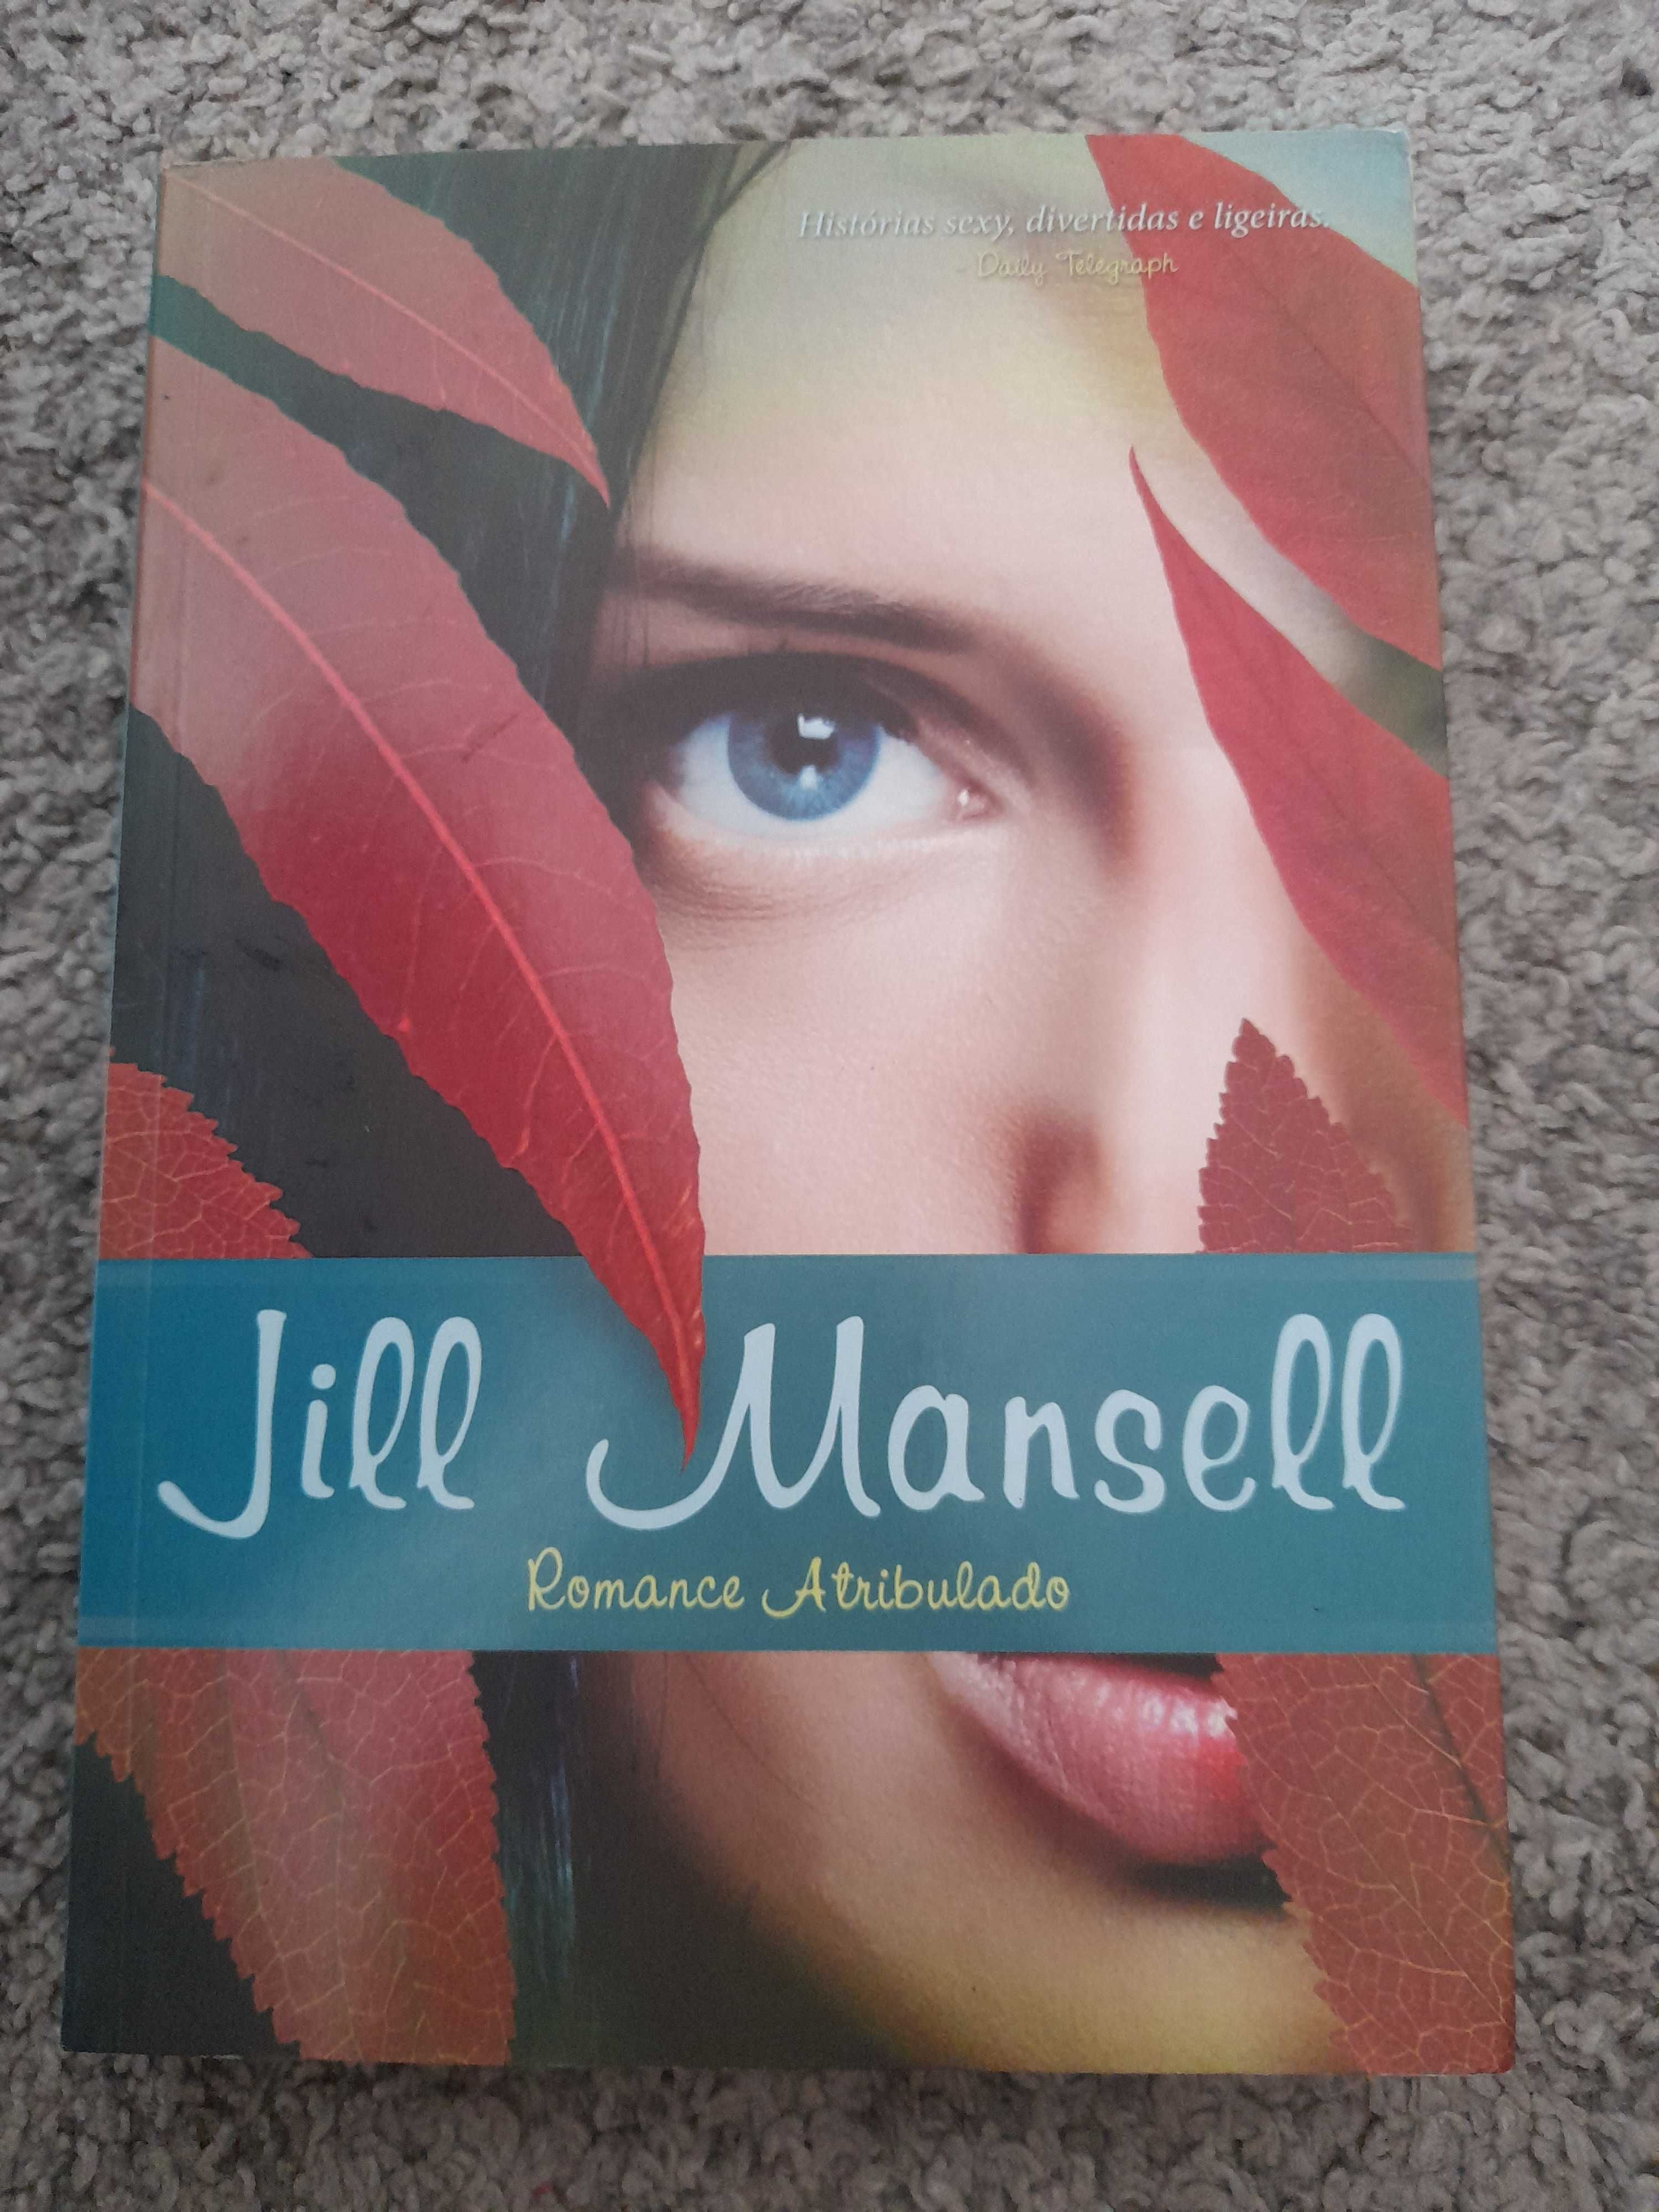 Livro "Romance atribulado" de Jill Mansell